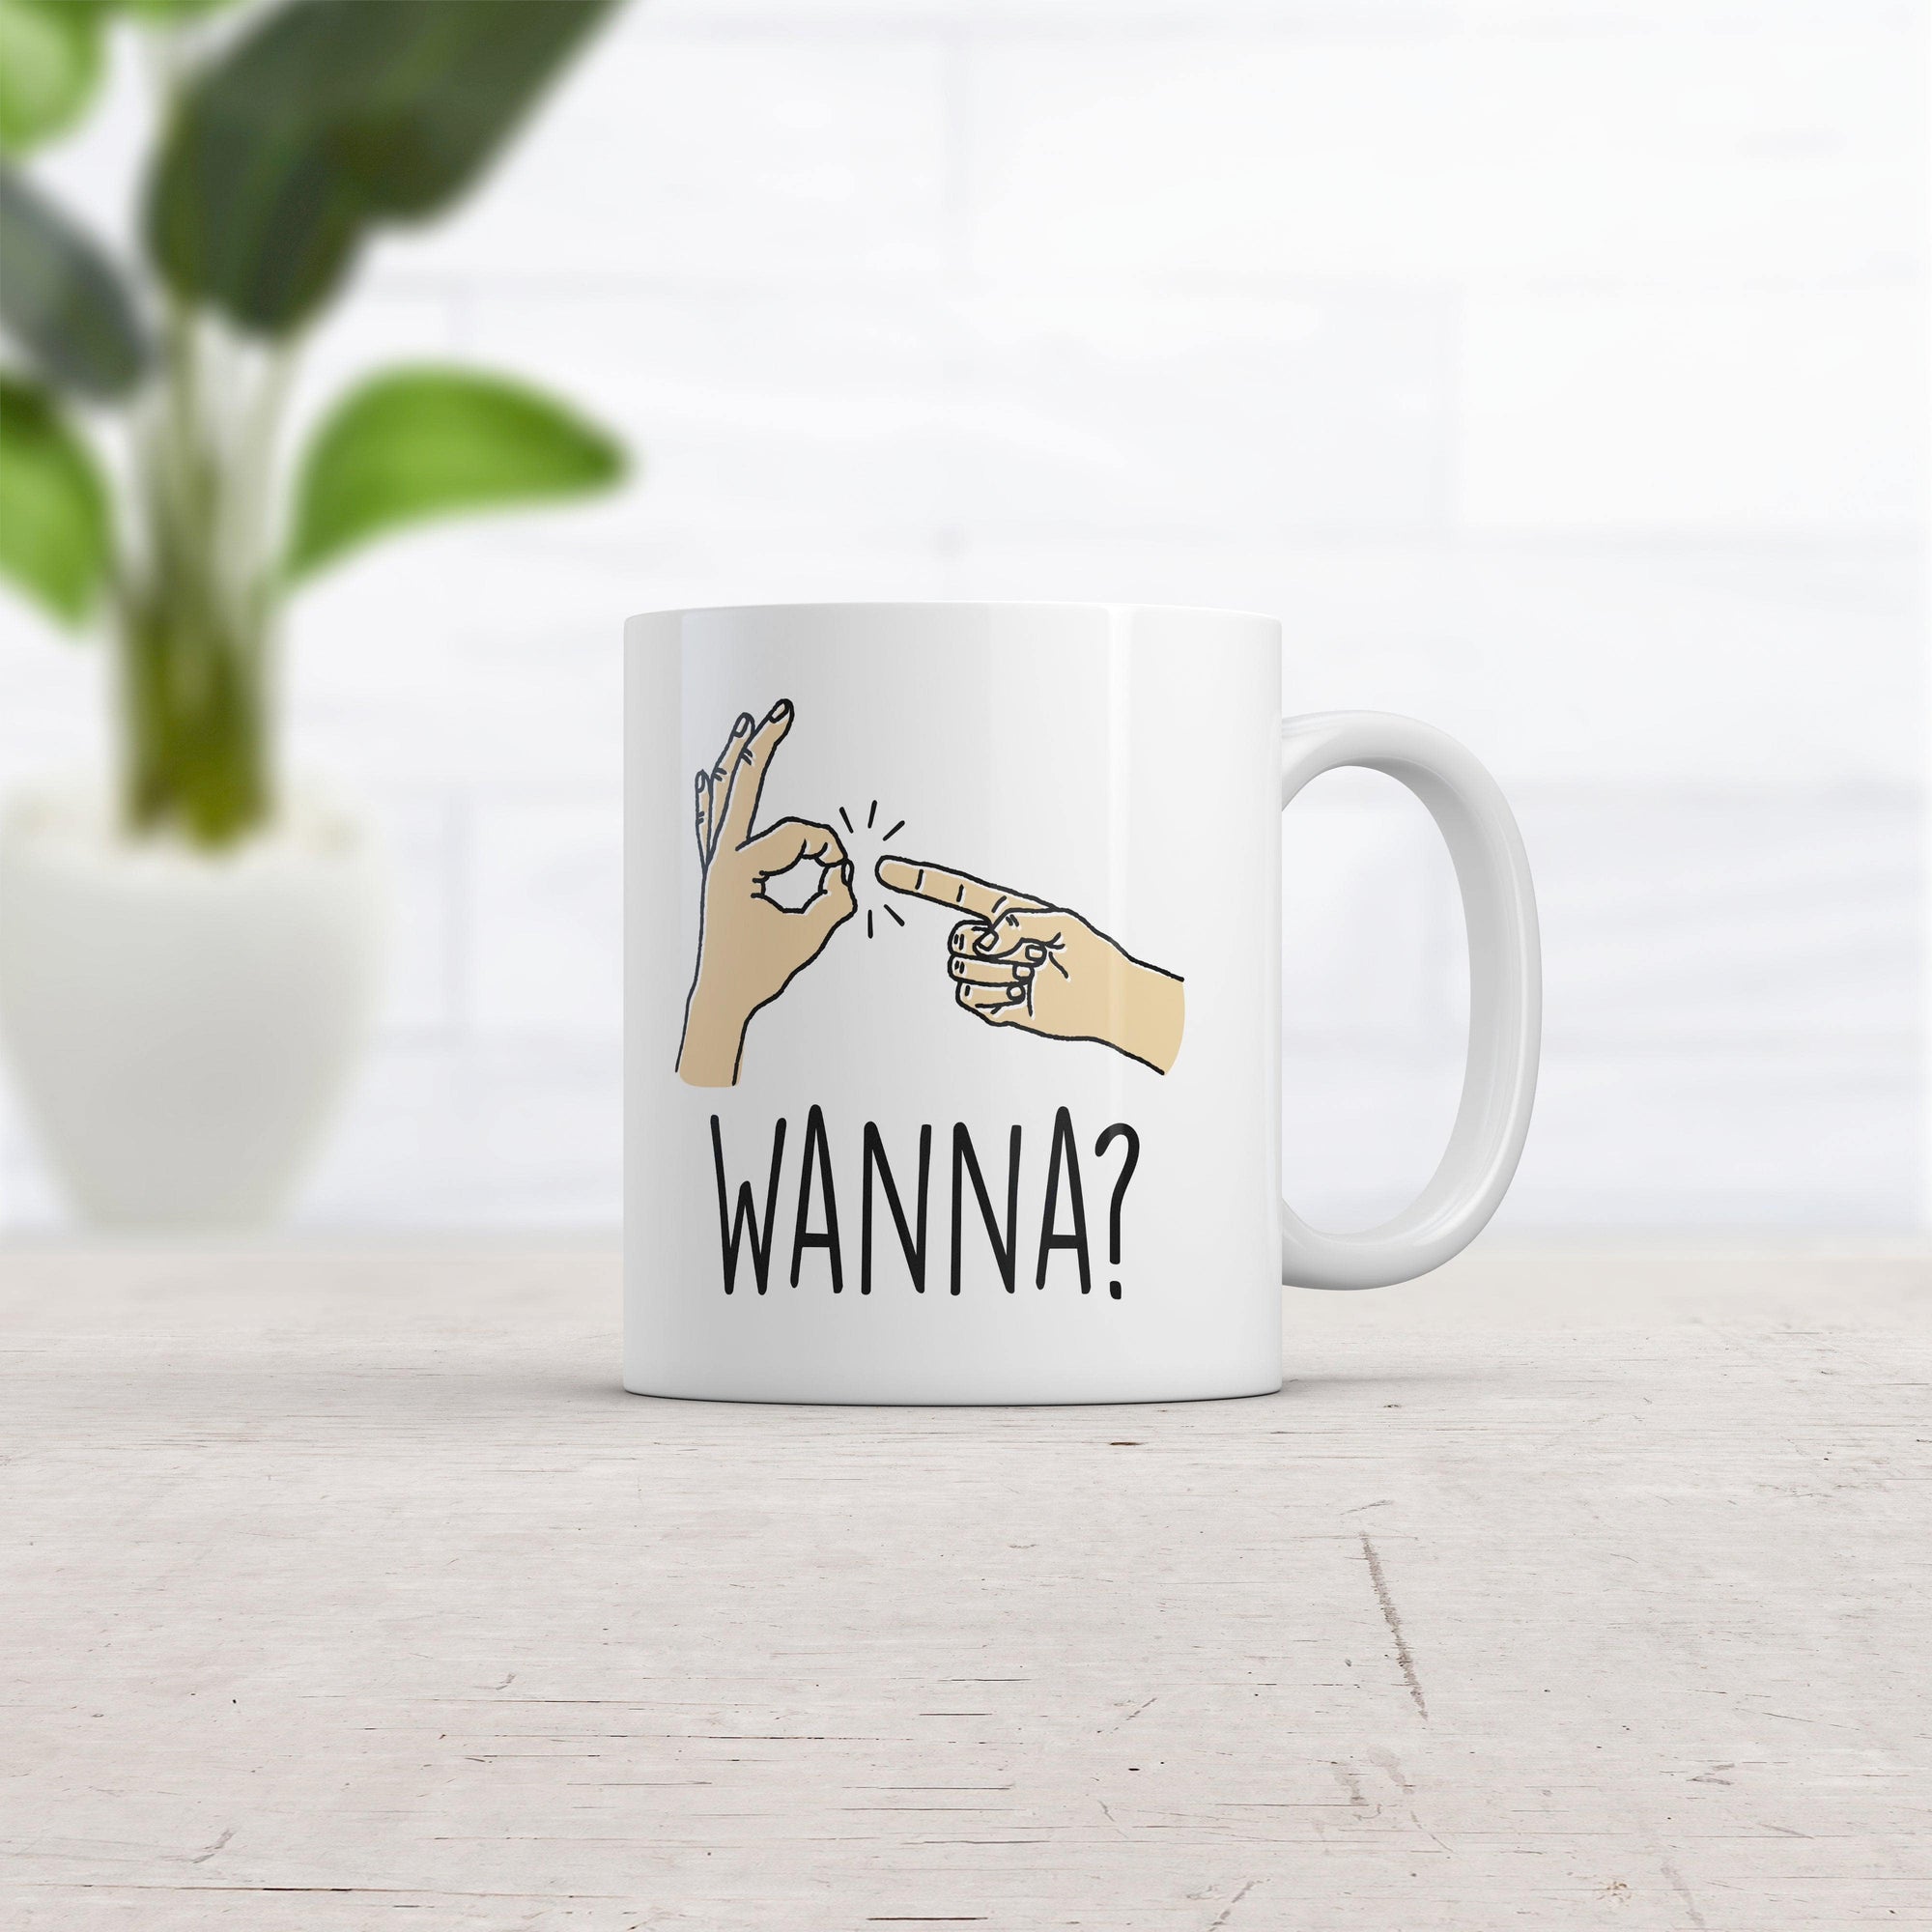 Wanna Finger Bang Mug Funny Offensive Sex Joke Hands Graphic Novelty Coffee Cup-11oz  -  Crazy Dog T-Shirts